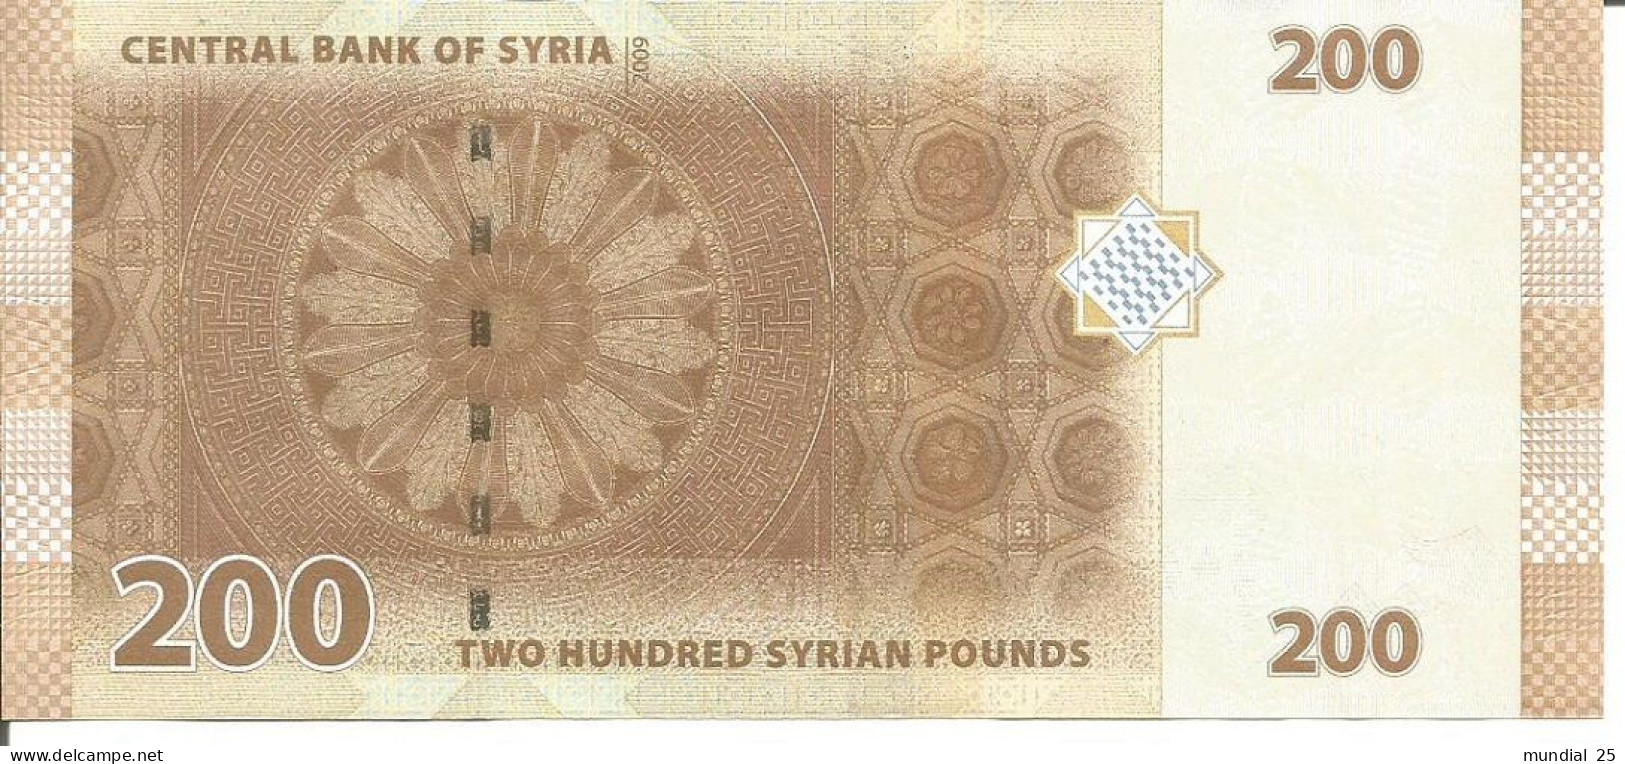 2 SYRIA NOTES 200 POUNDS 2009 - Syrien